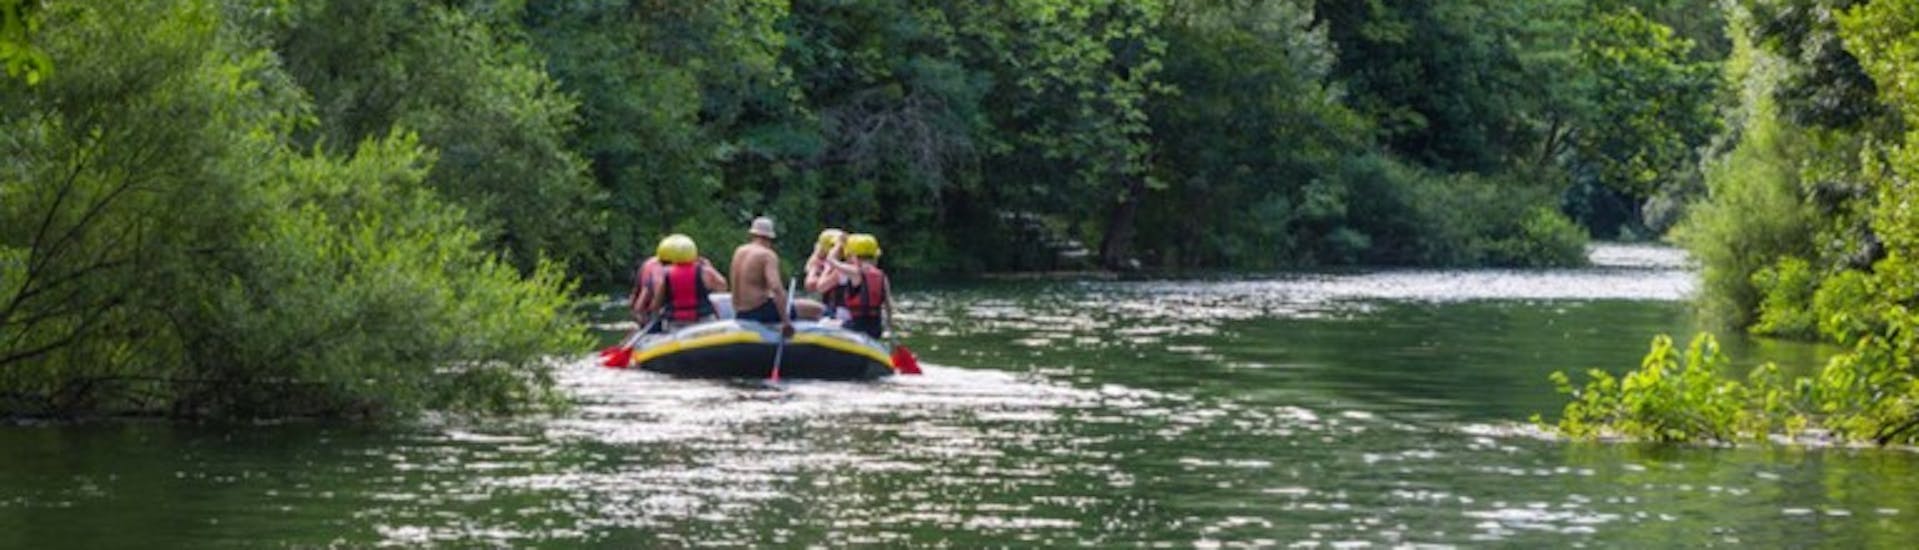 Private Rafting Tour auf dem Cetina Fluss ab Zadvarje mit Abholservice.